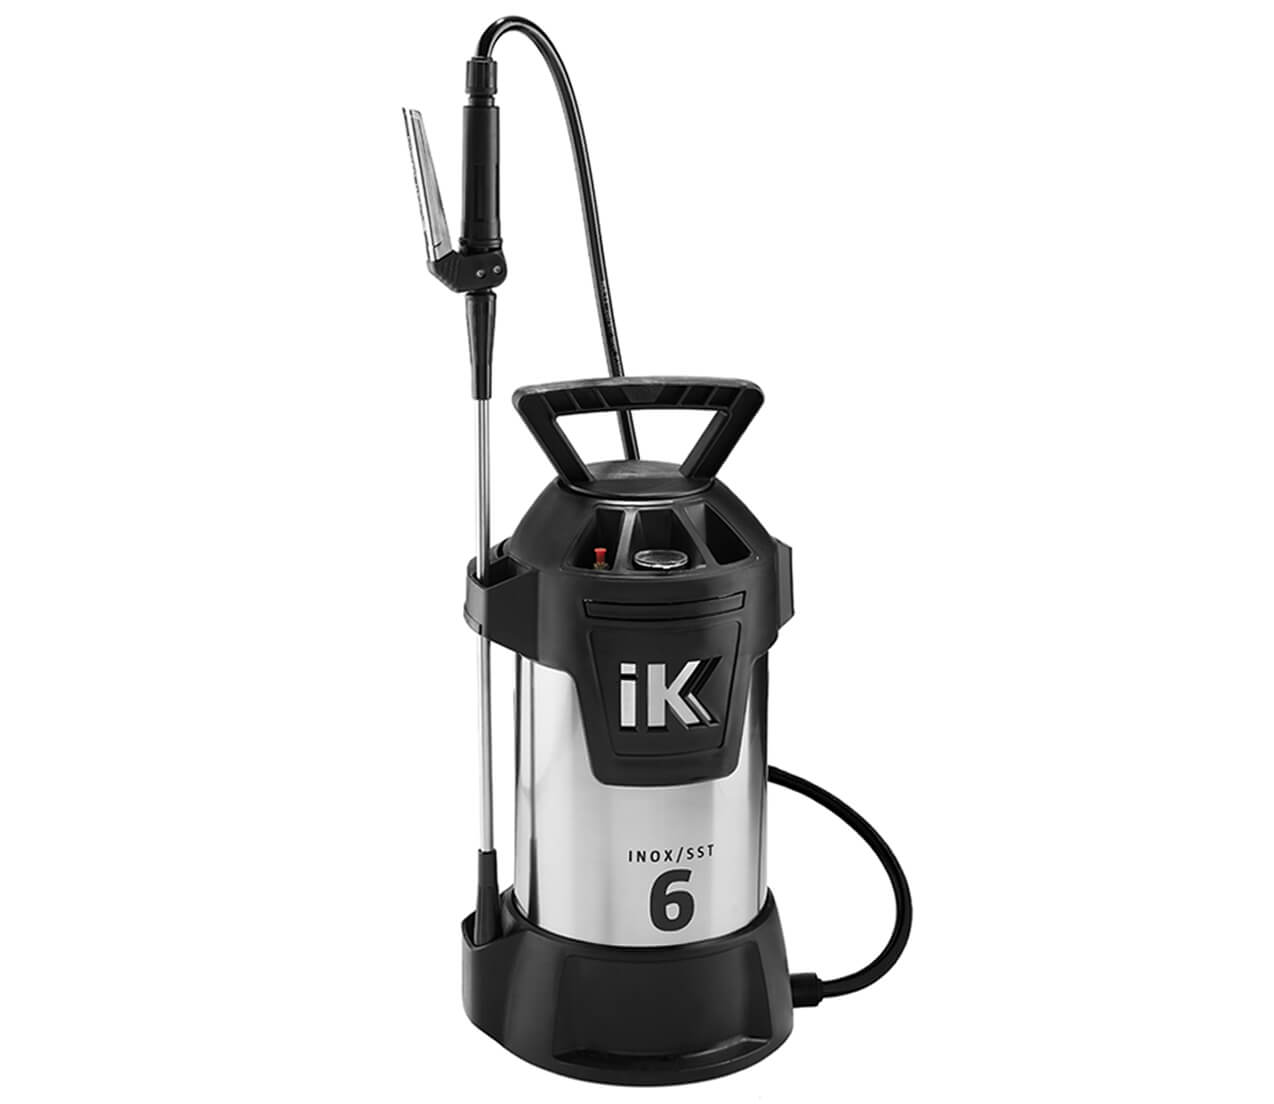 IK RVS INOX 6 Sprayer 6 liter